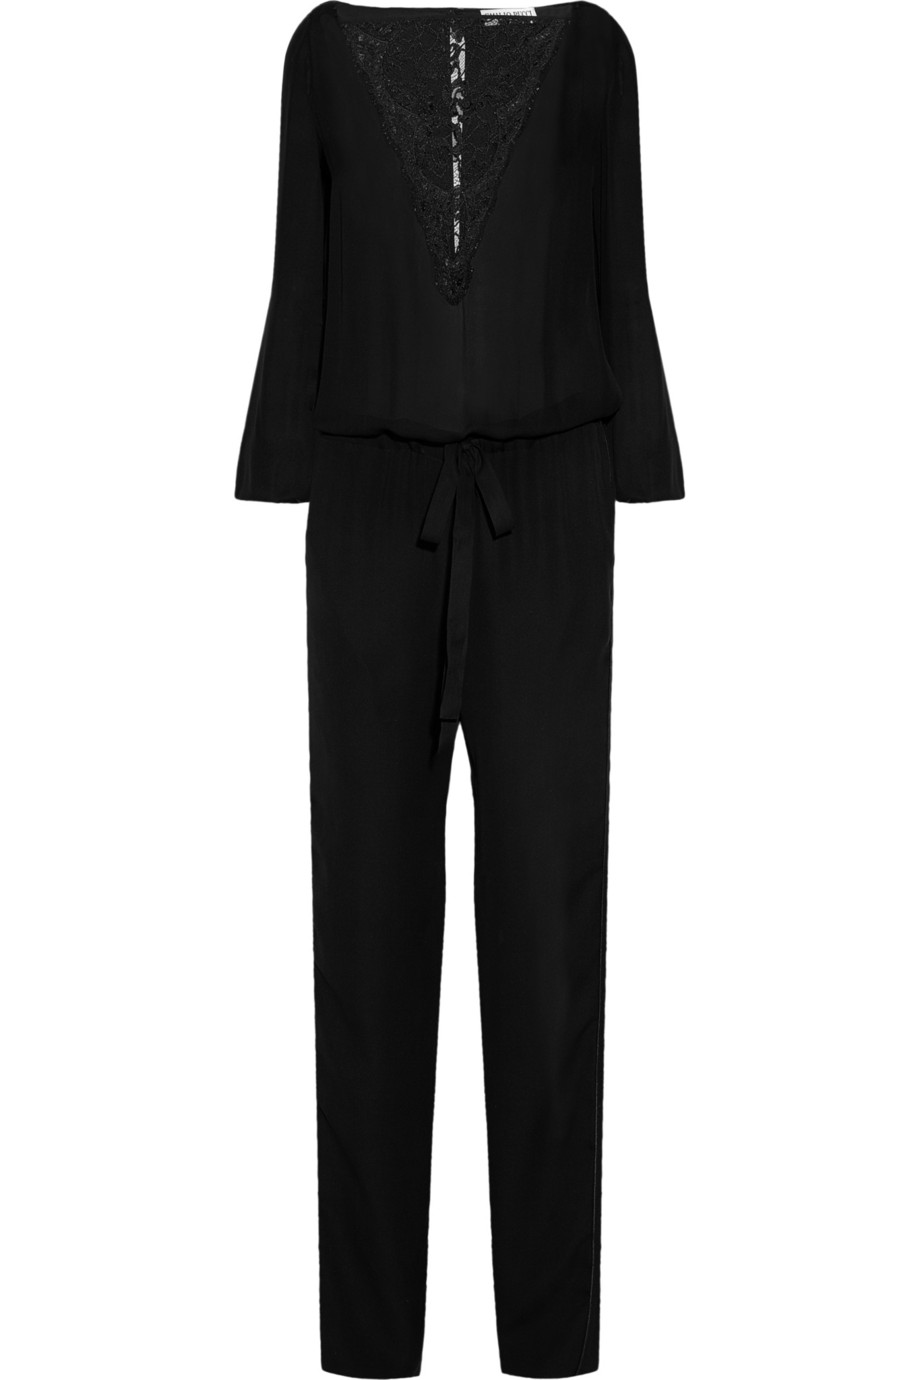 Emilio Pucci Lace Trimmed Silk-blend Chiffon Jumpsuit in Black | Lyst